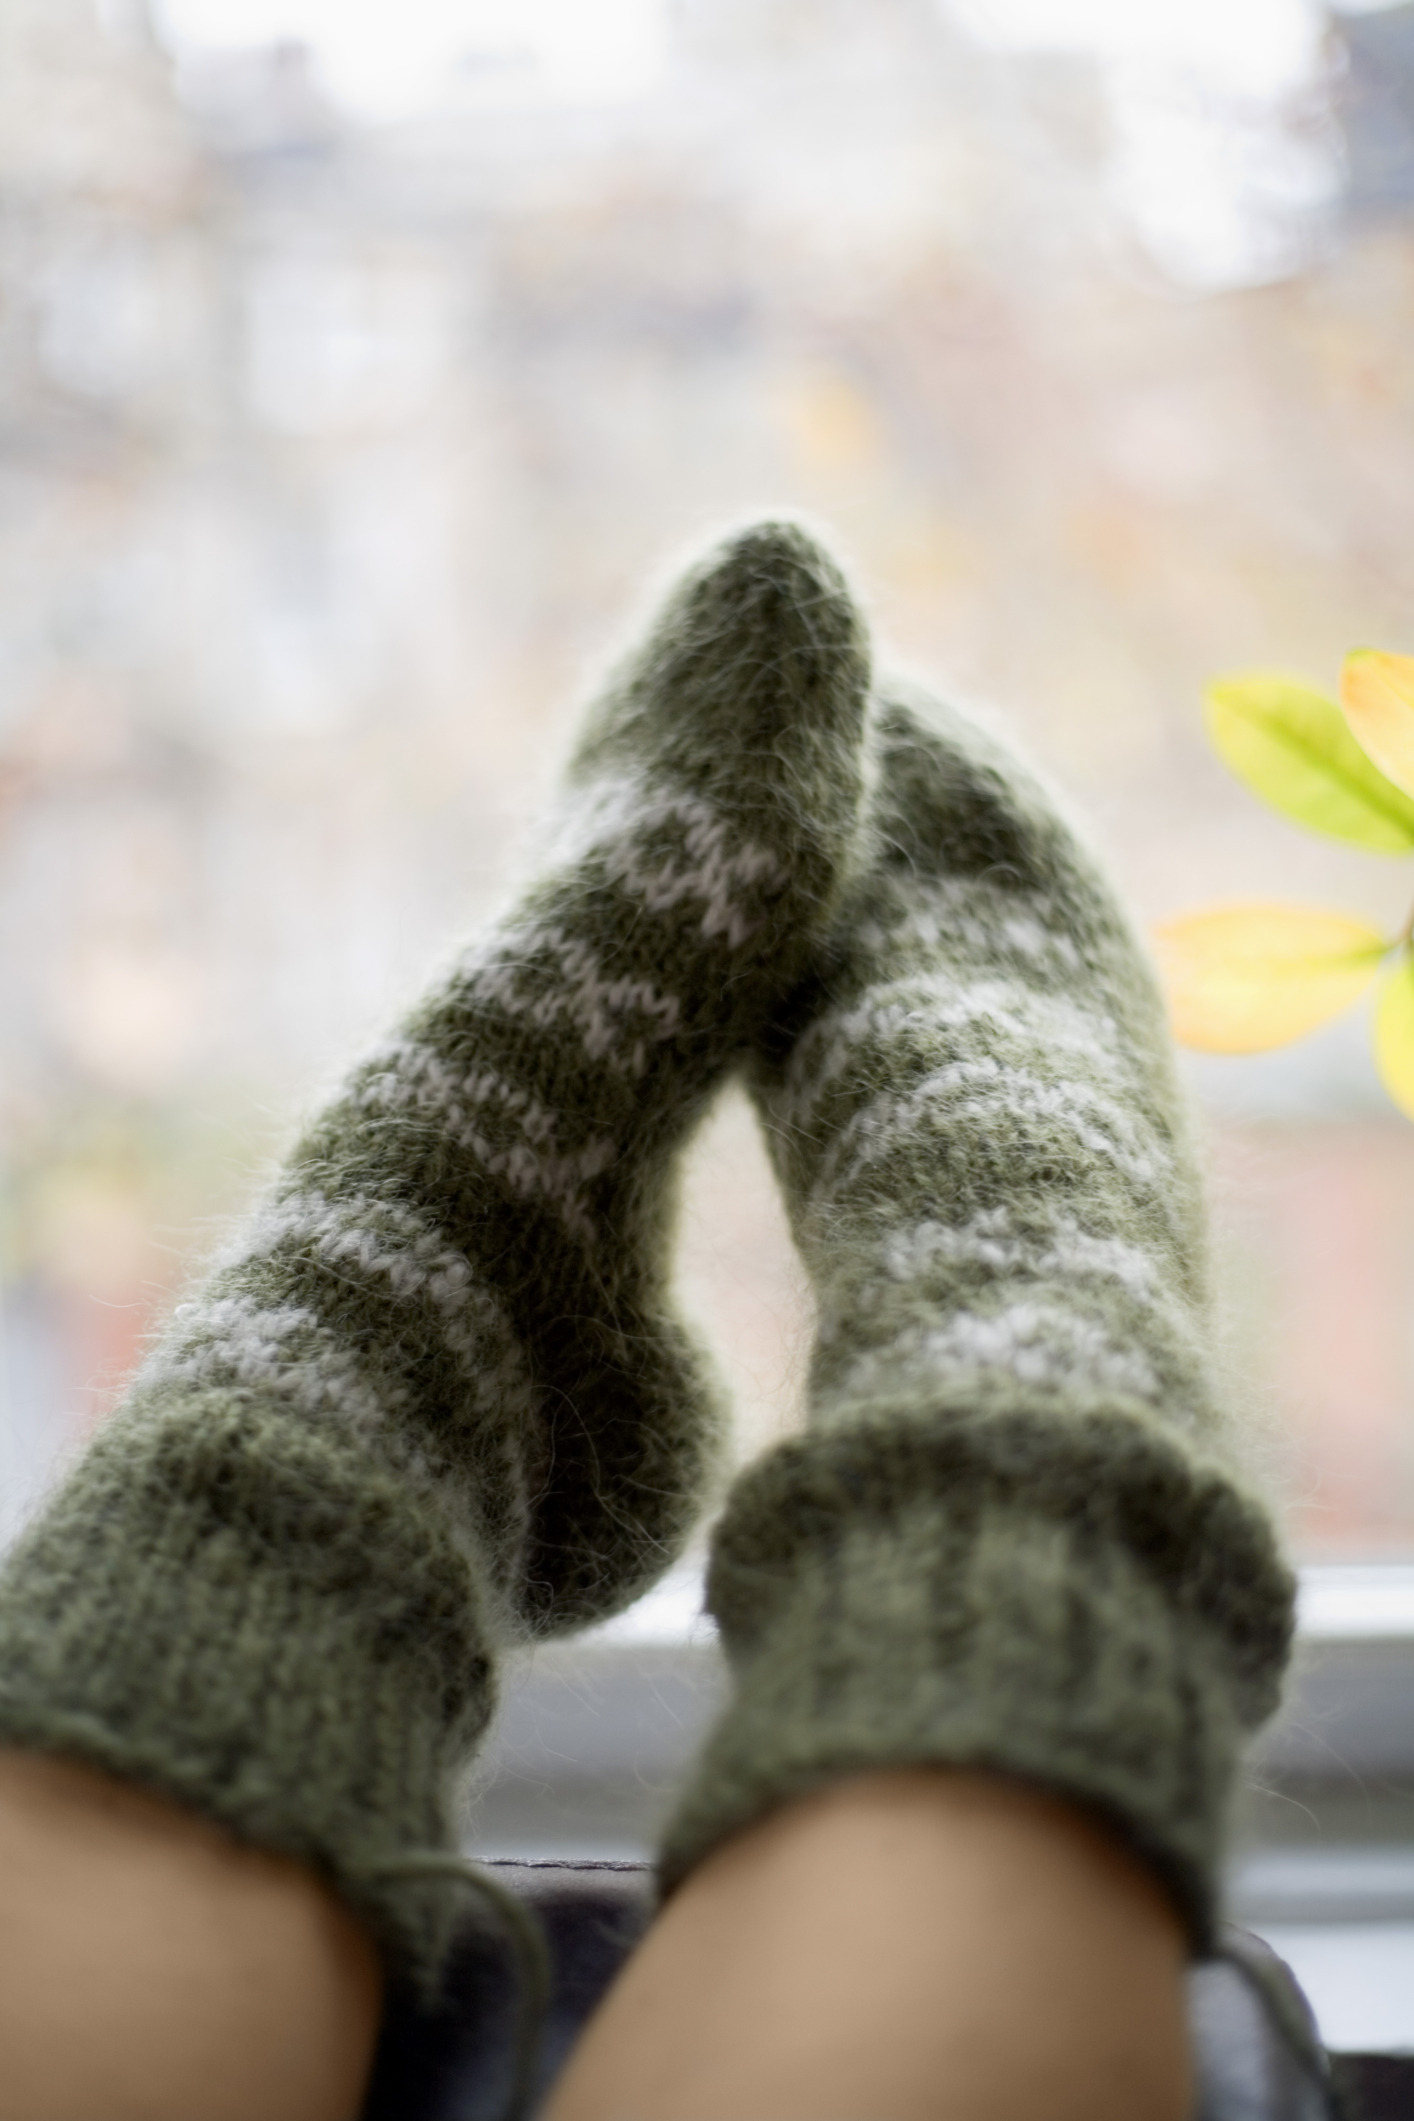 How to Fix Shrunken Wool Socks